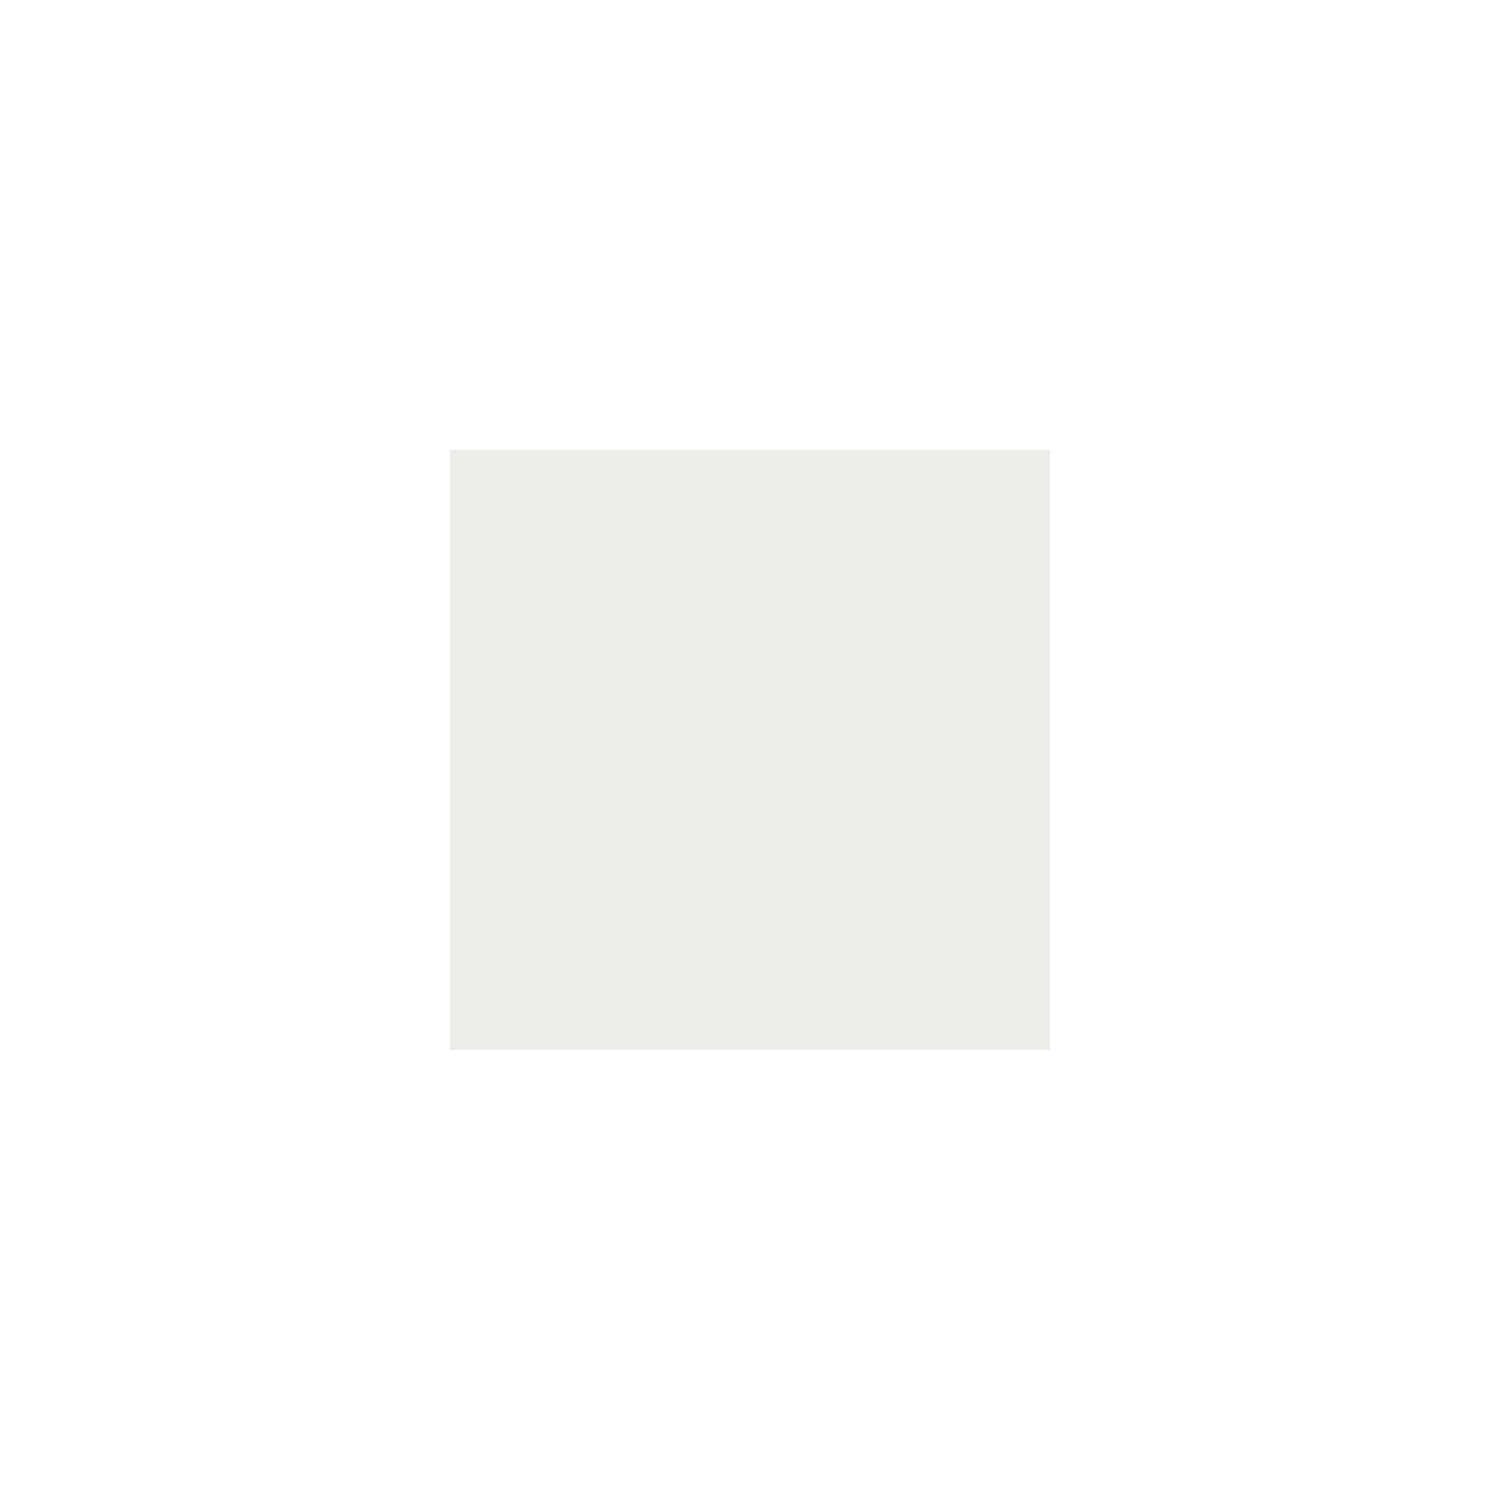 Itamoby Consolle allungabile 90x40/300 cm Diago Quercia Natura telaio Bianco